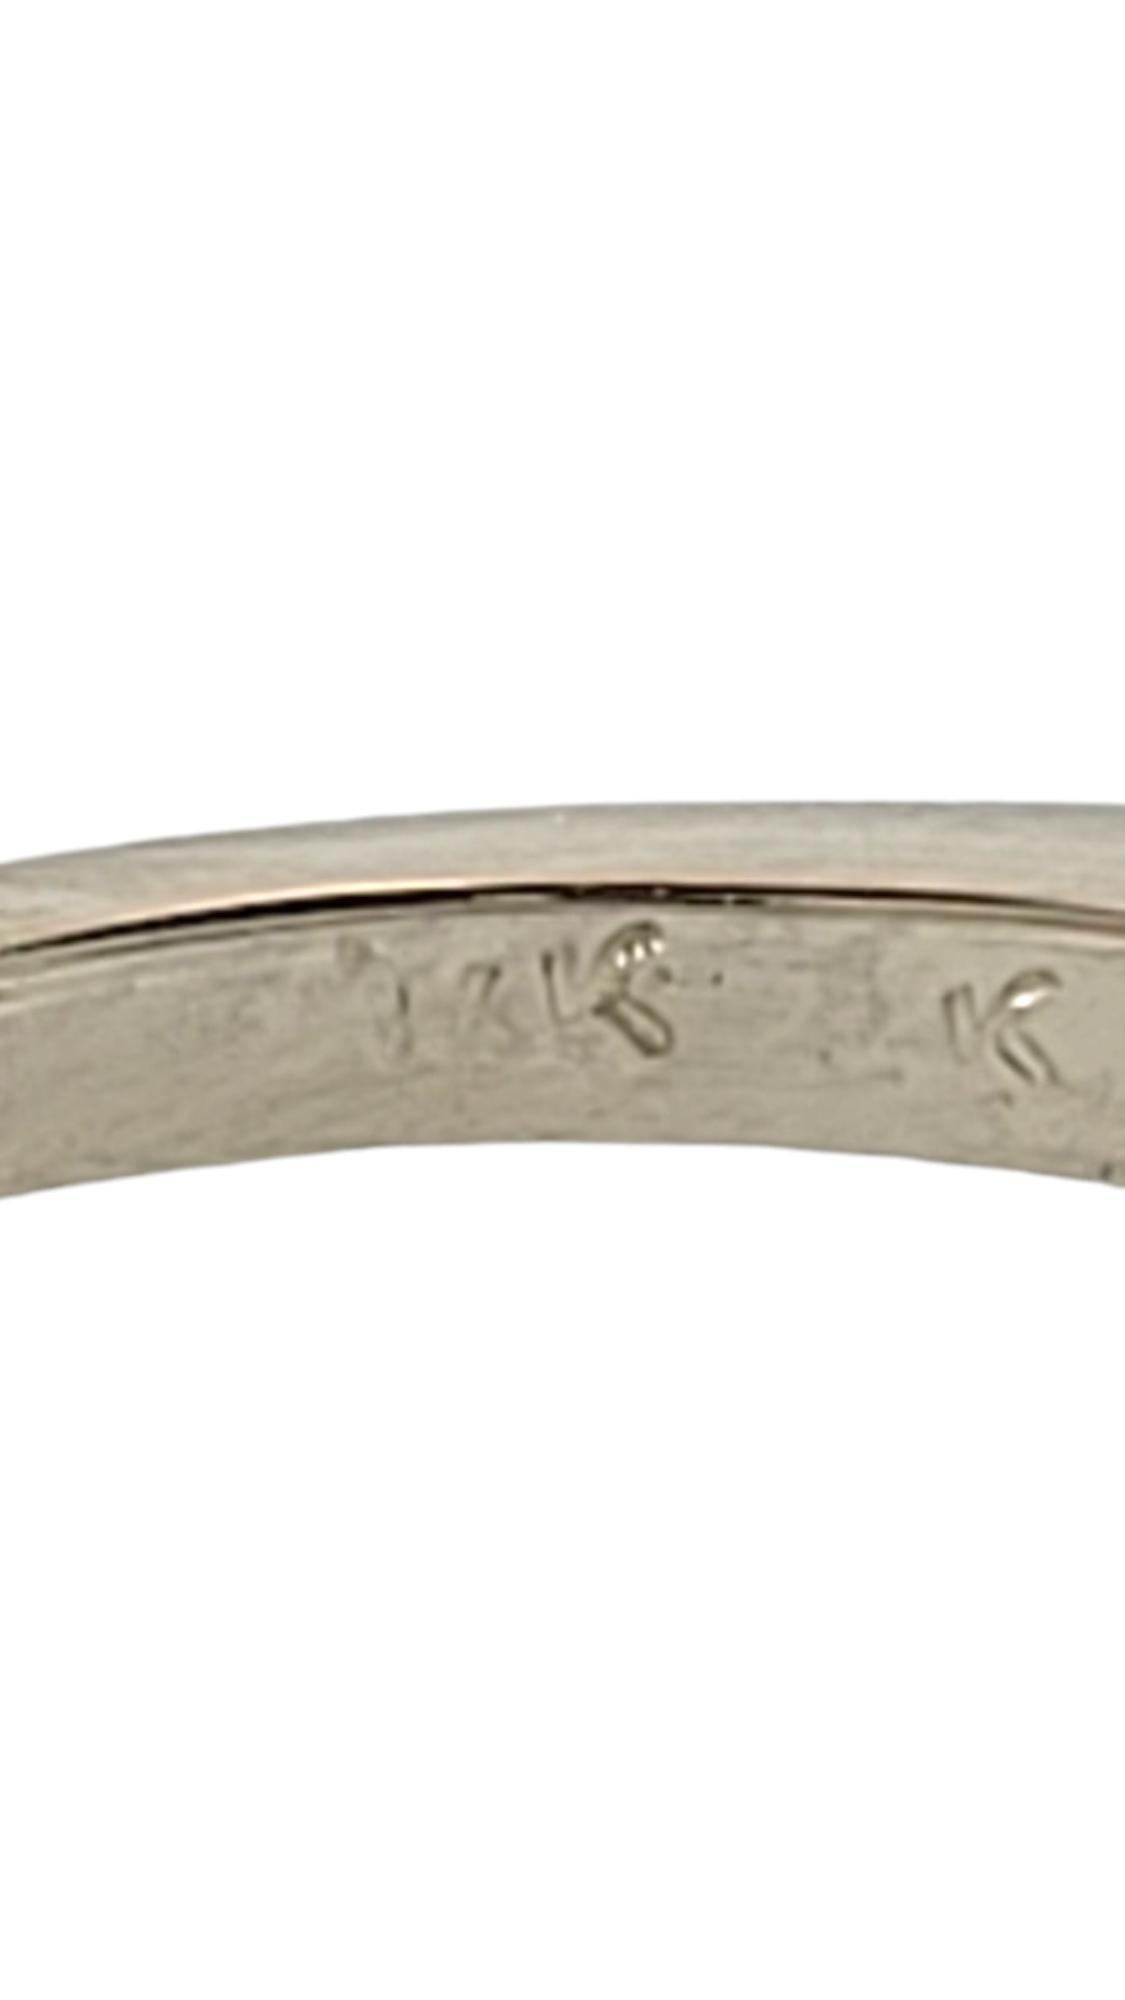 Women's Vintage 14K White Gold Diamond Ring Size 4.75 #16930 For Sale